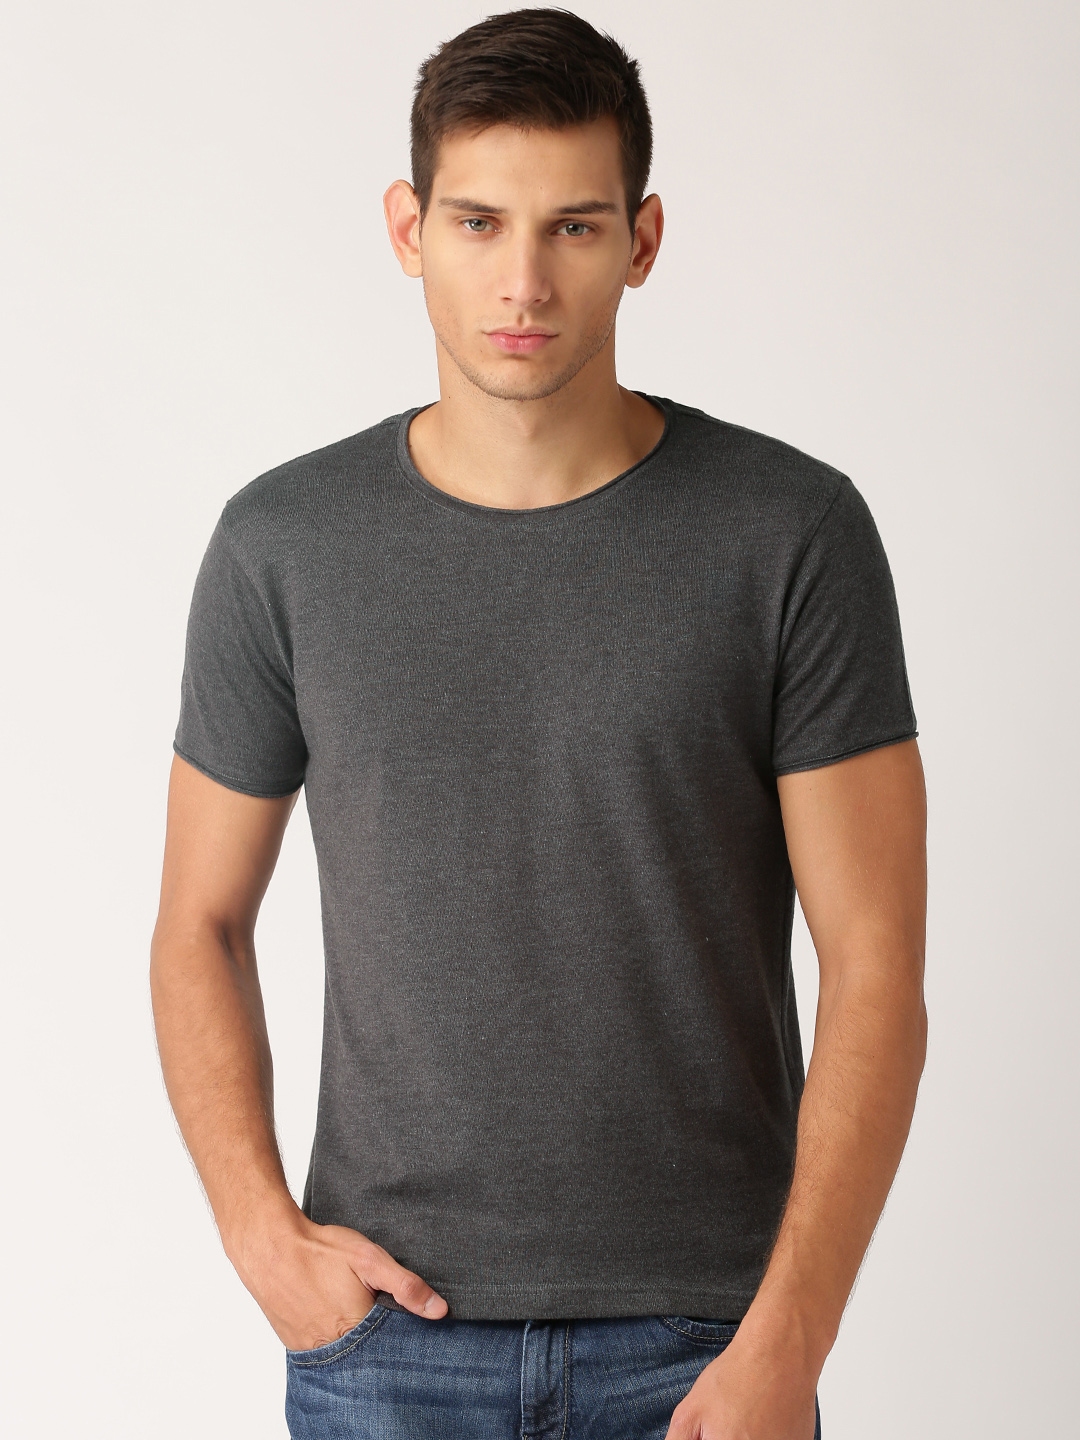 Buy ETHER Charcoal Grey T Shirt - Tshirts for Men 1189875 | Myntra